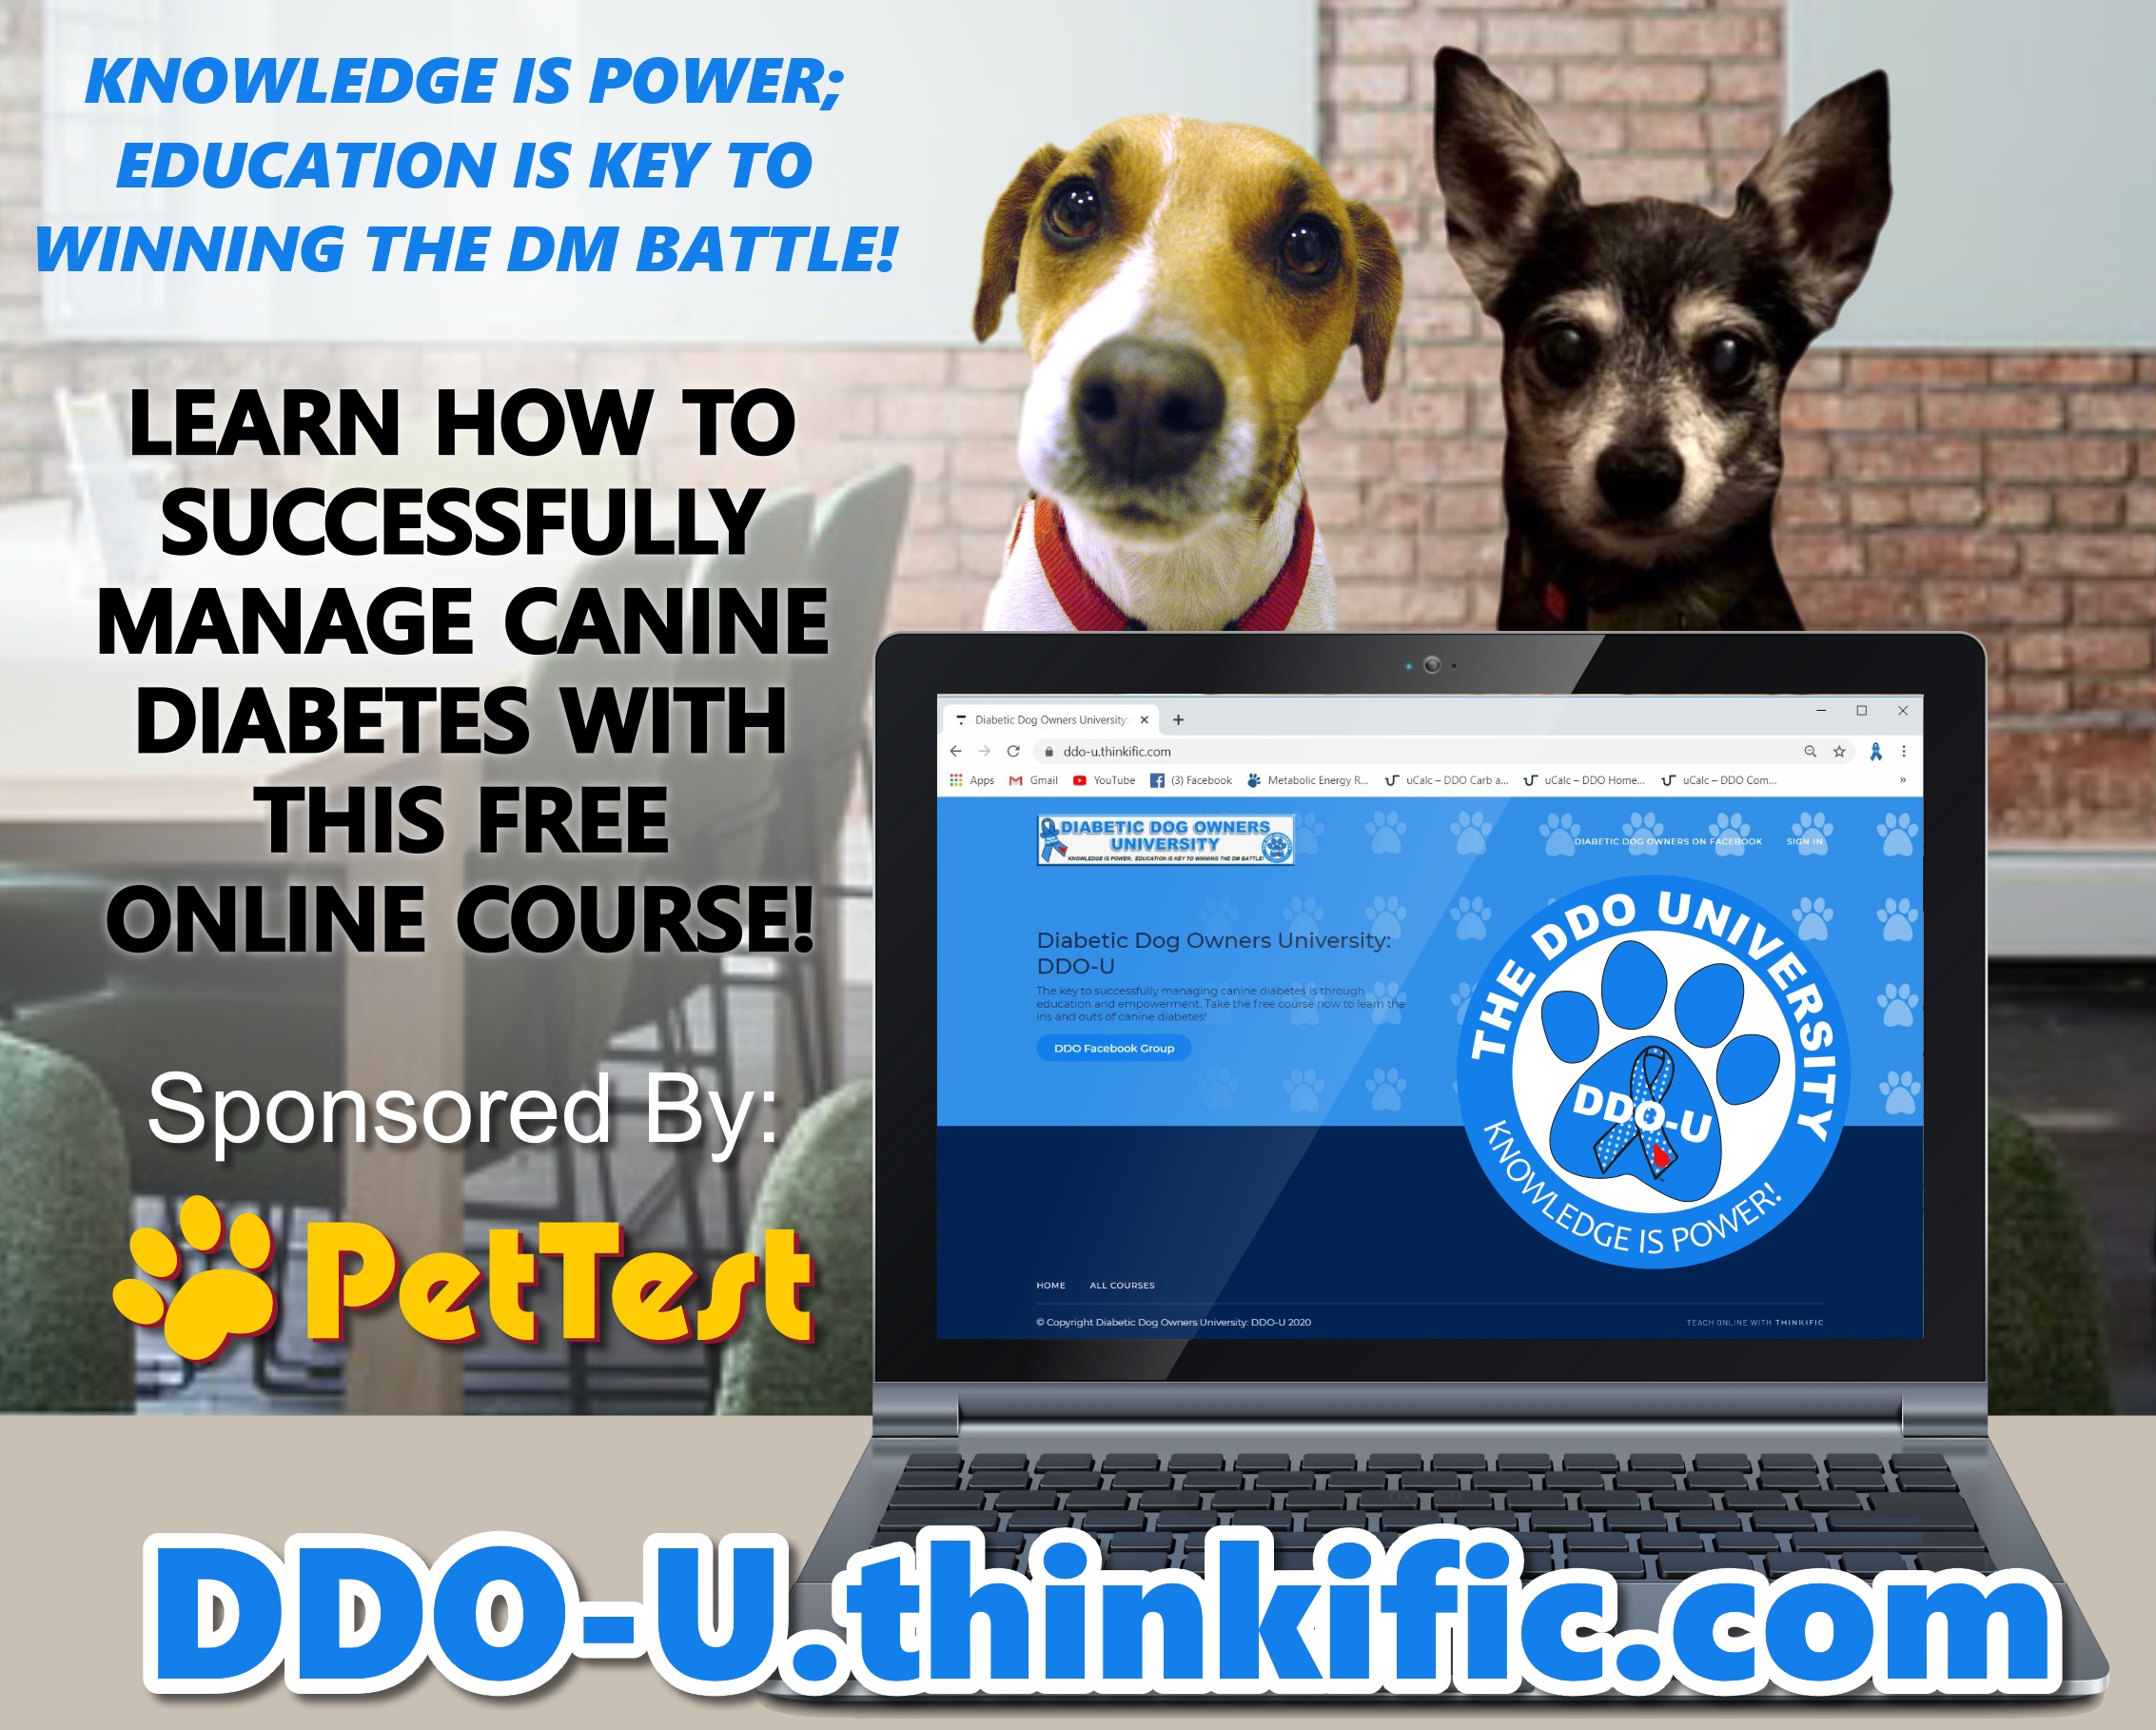 DDO-U: Diabetic Dog Owners University for PT Blog mtm